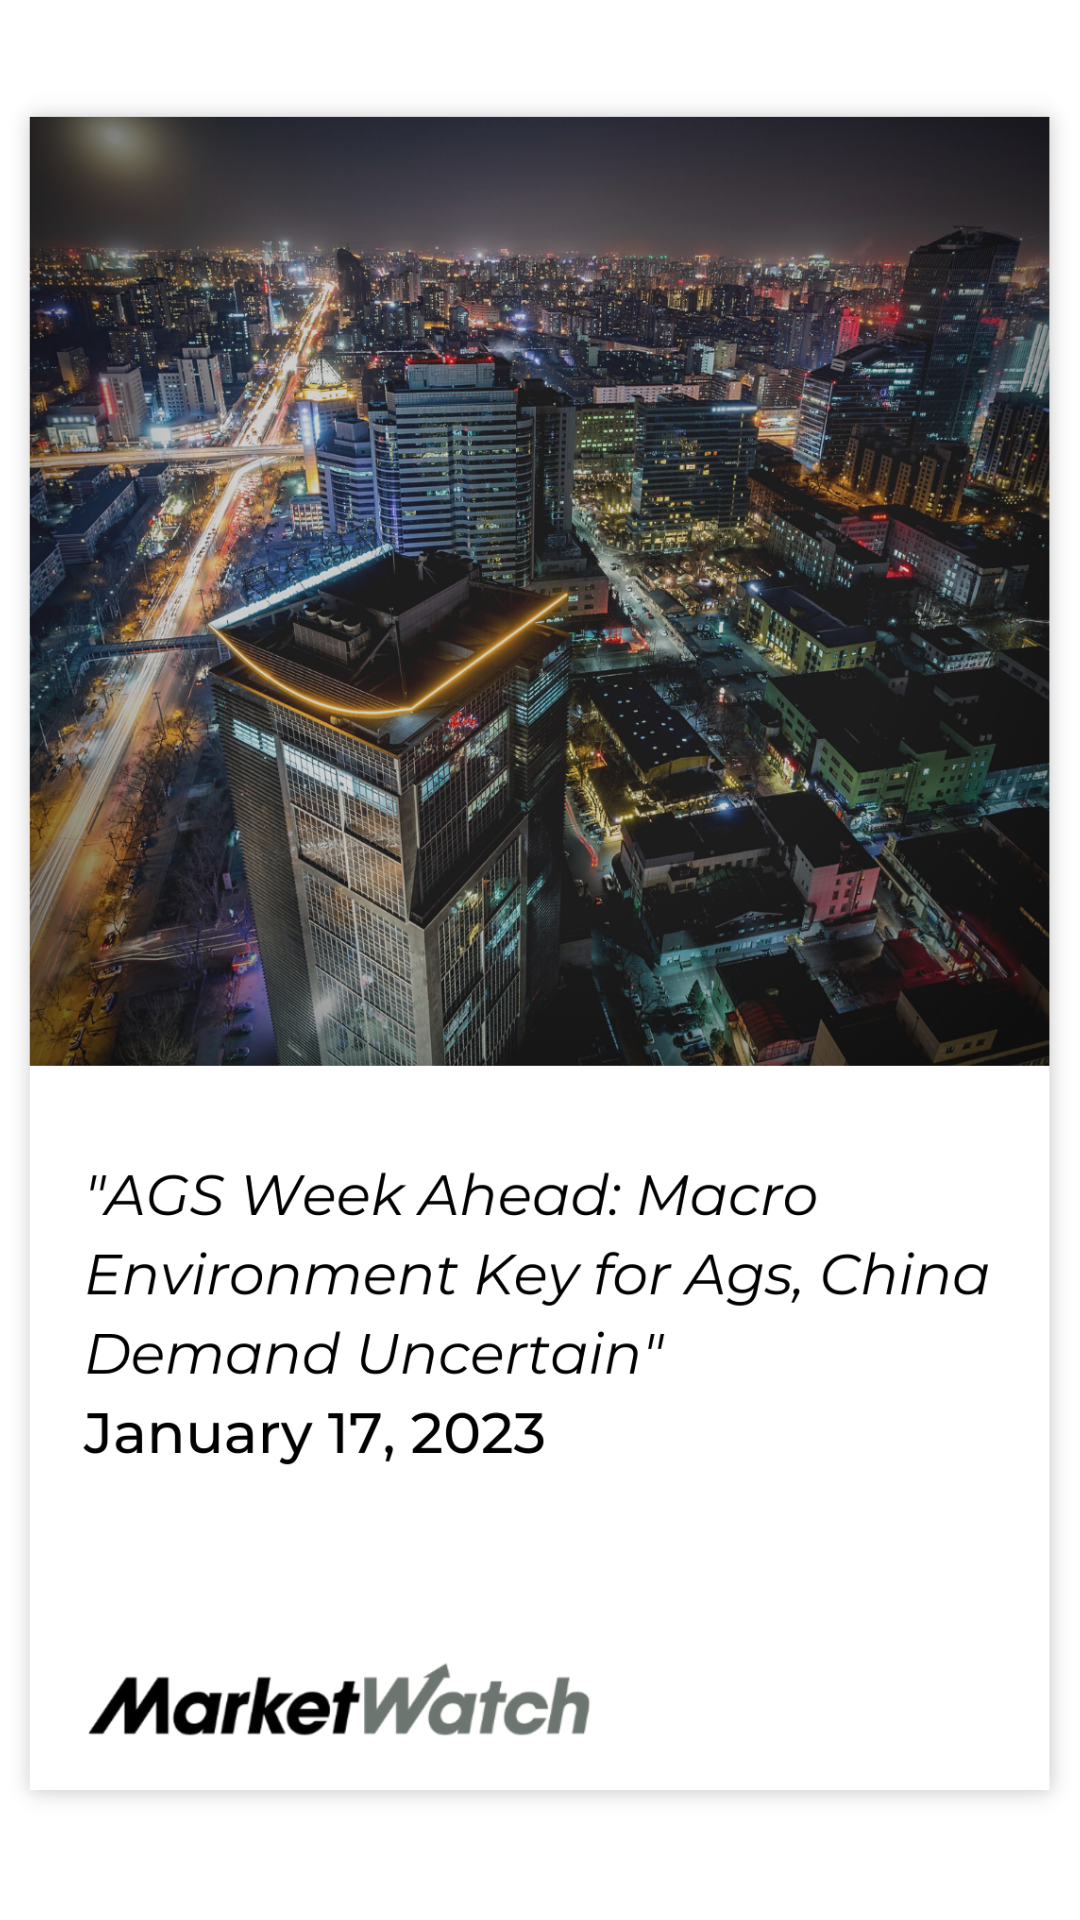 "AGS Week Ahead: Macro Environment Key for Ags, China Demand Uncertain"